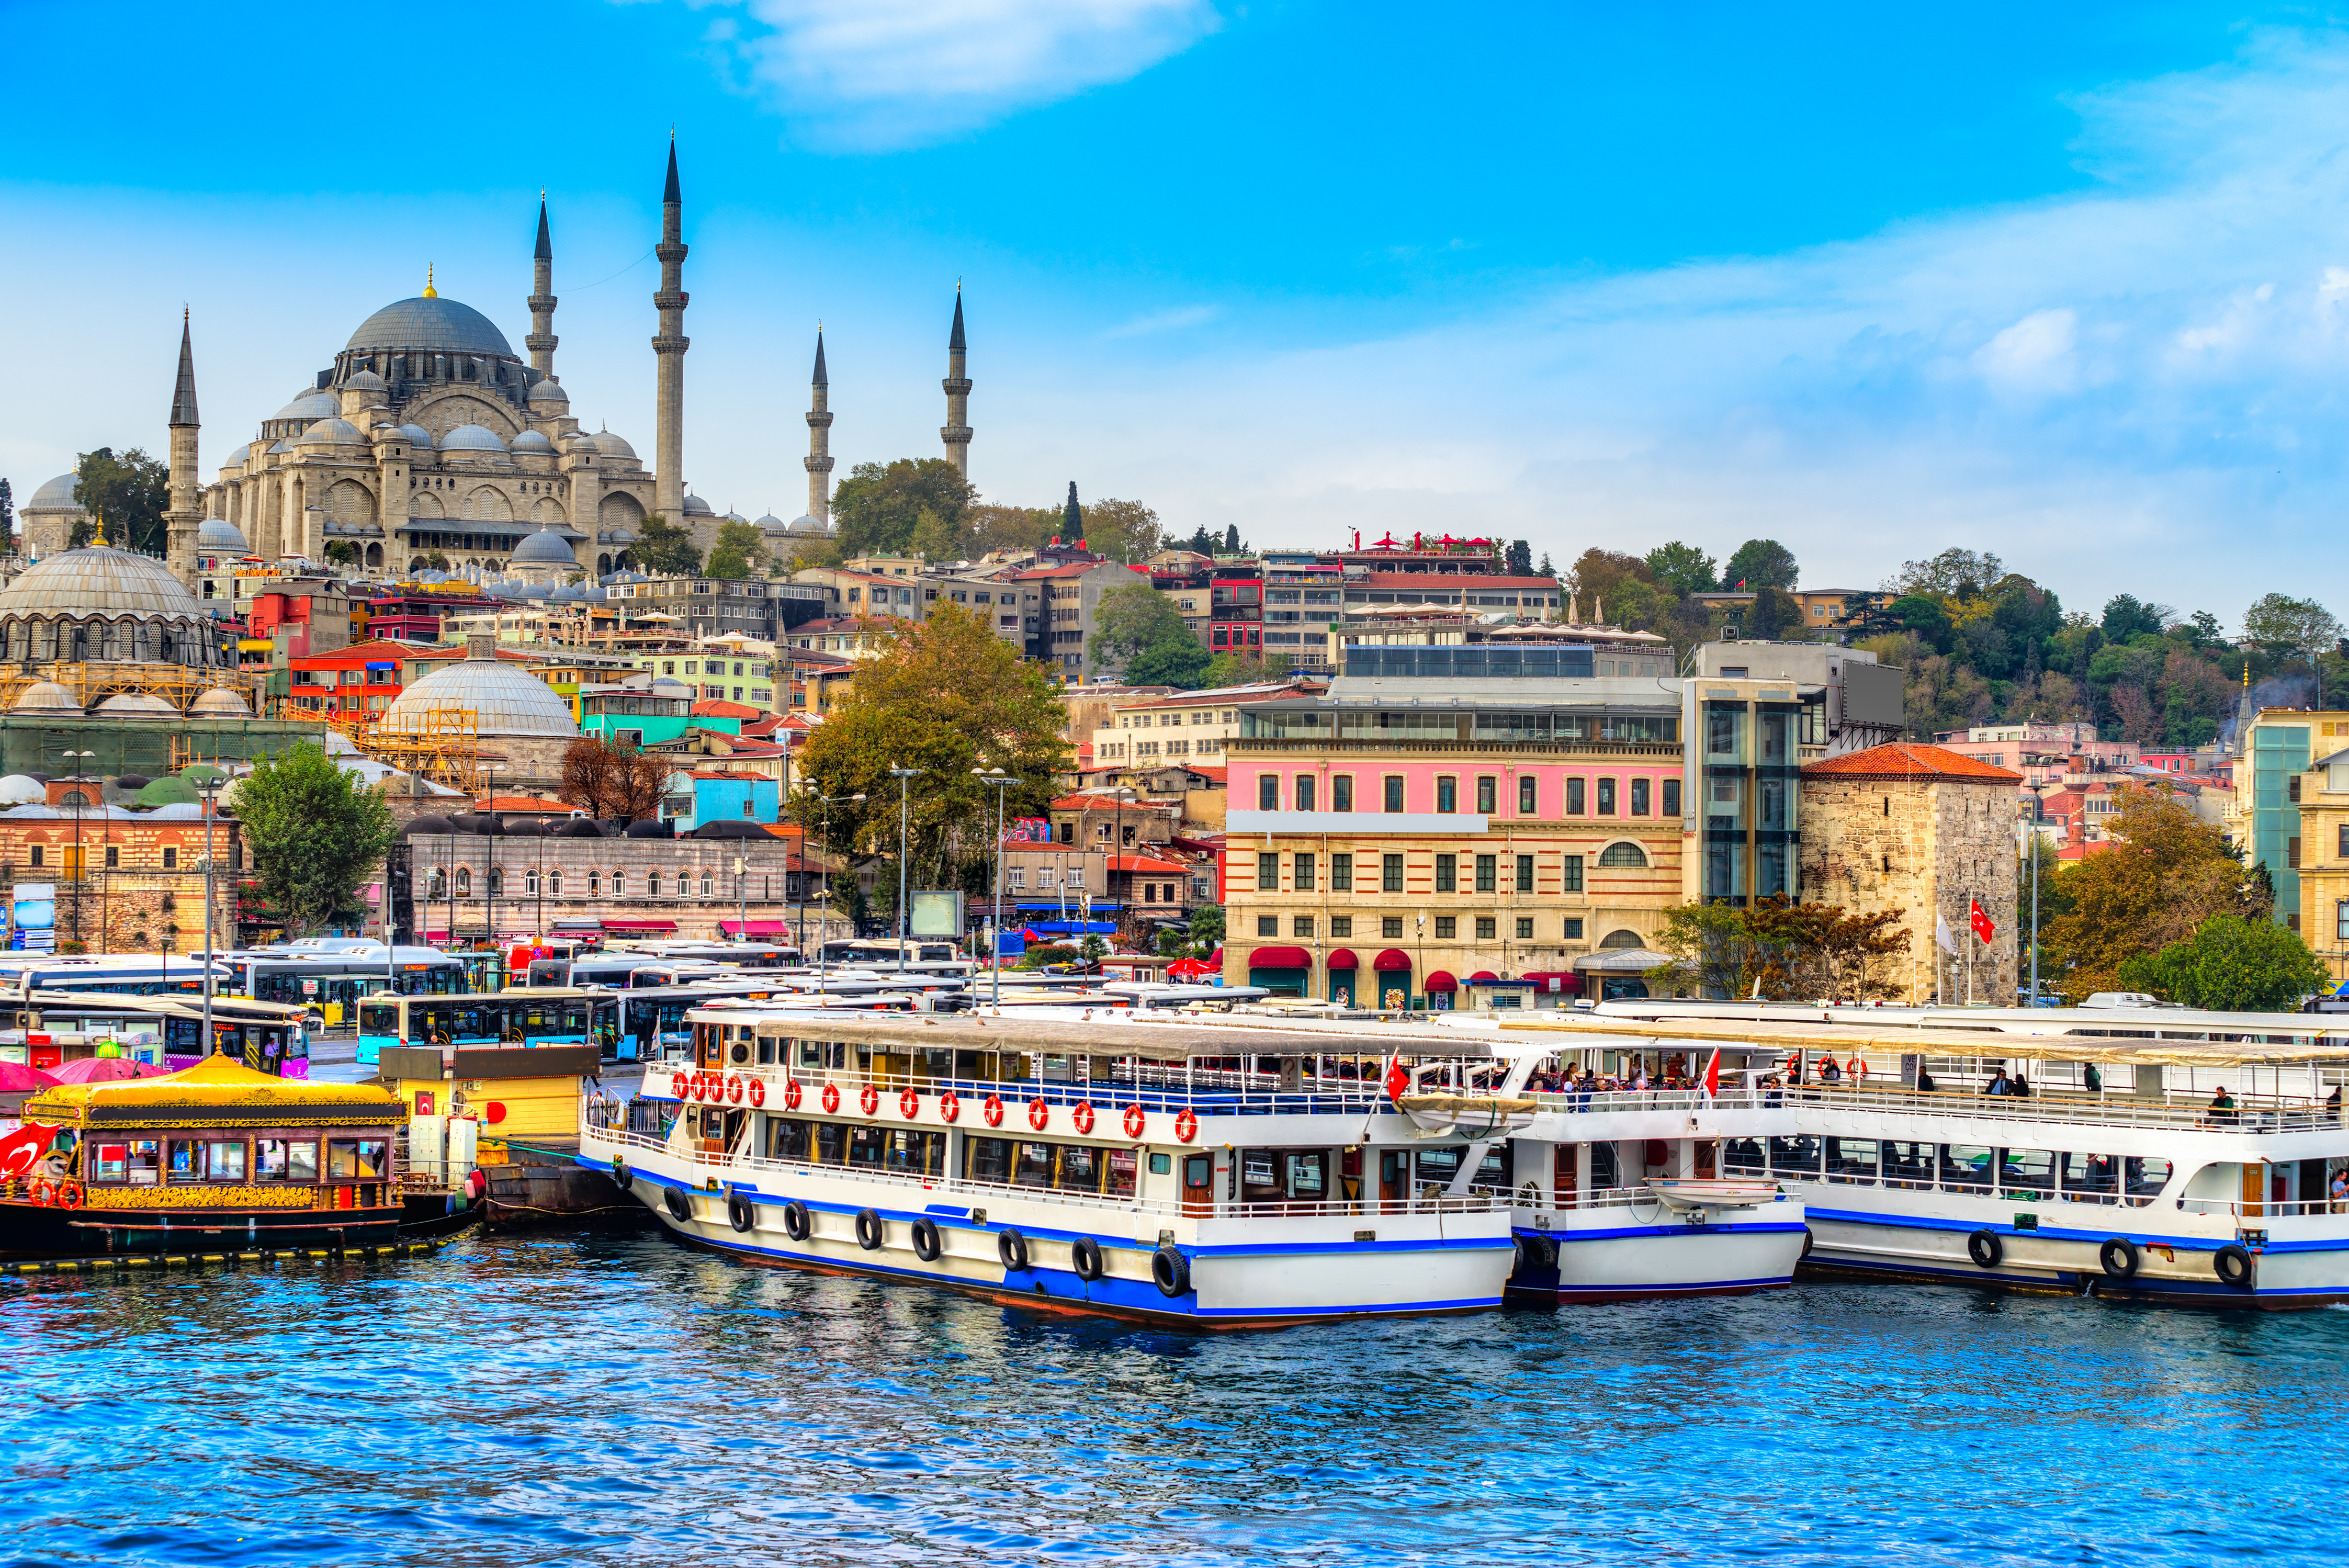 Istanbul bosphorus bridge and city lights 4K wallpaper download